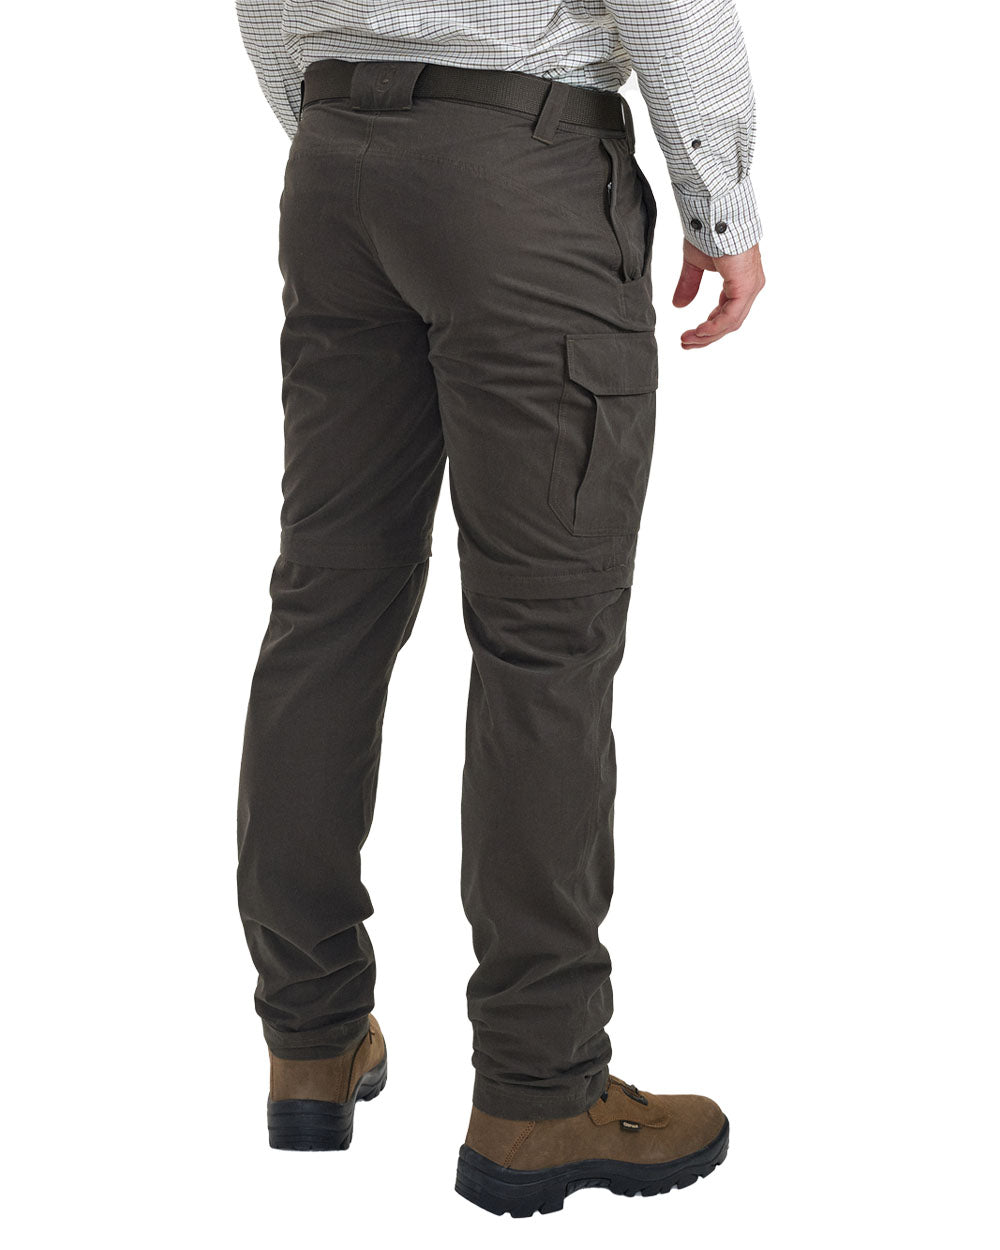 Black Ink coloured Deerhunter Slogen Zip-off Trousers on White background 